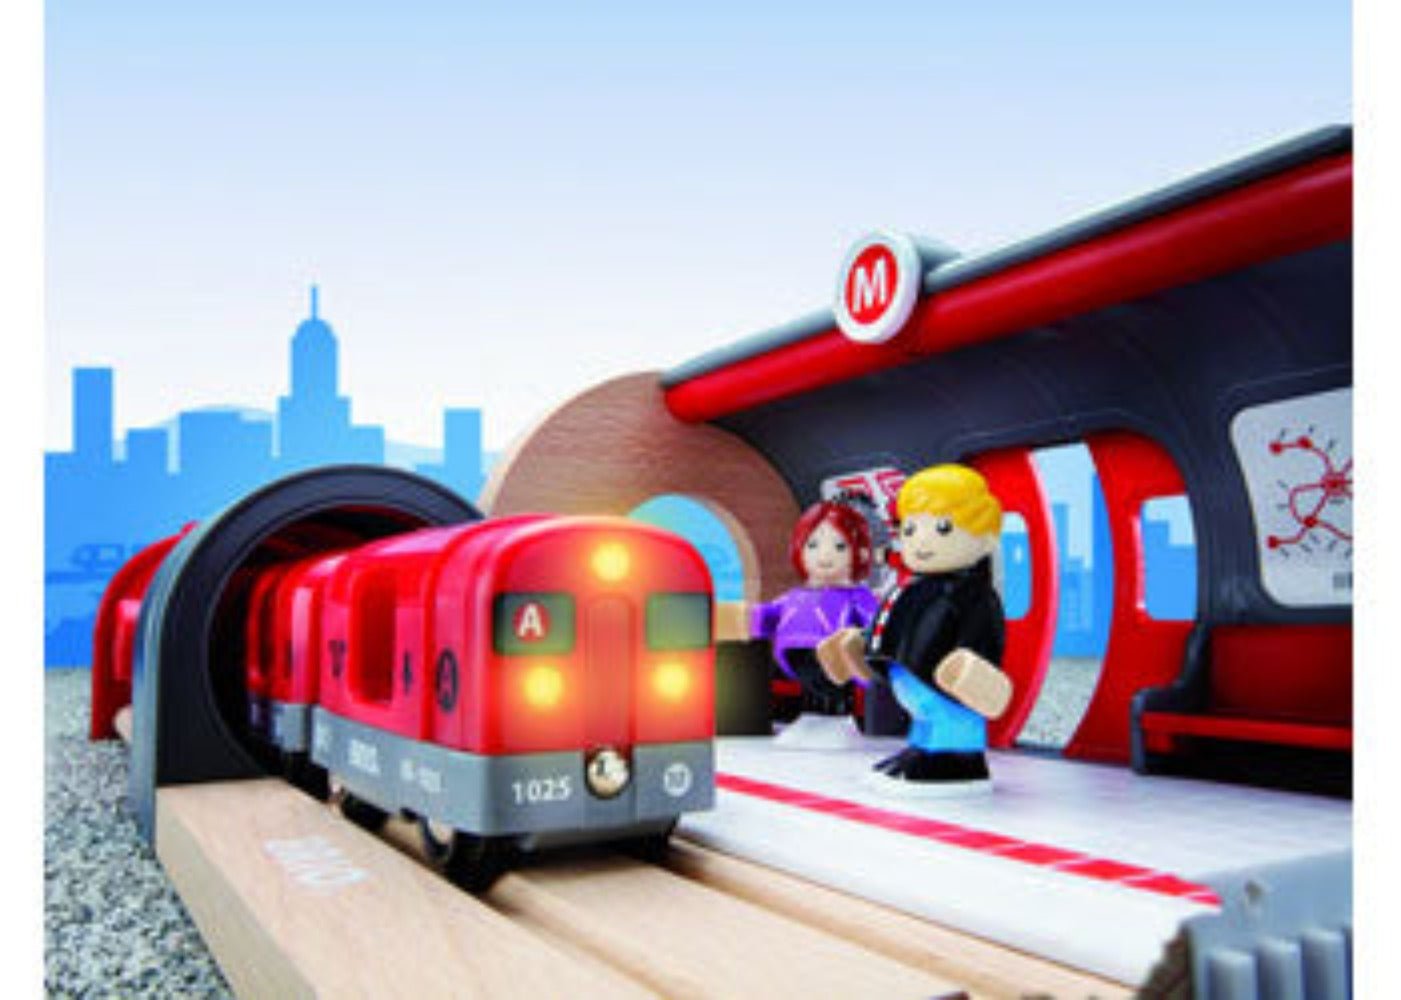 BRIO Set - Metro Railway Set, 20 pieces - www.creativeplayresources.com.au